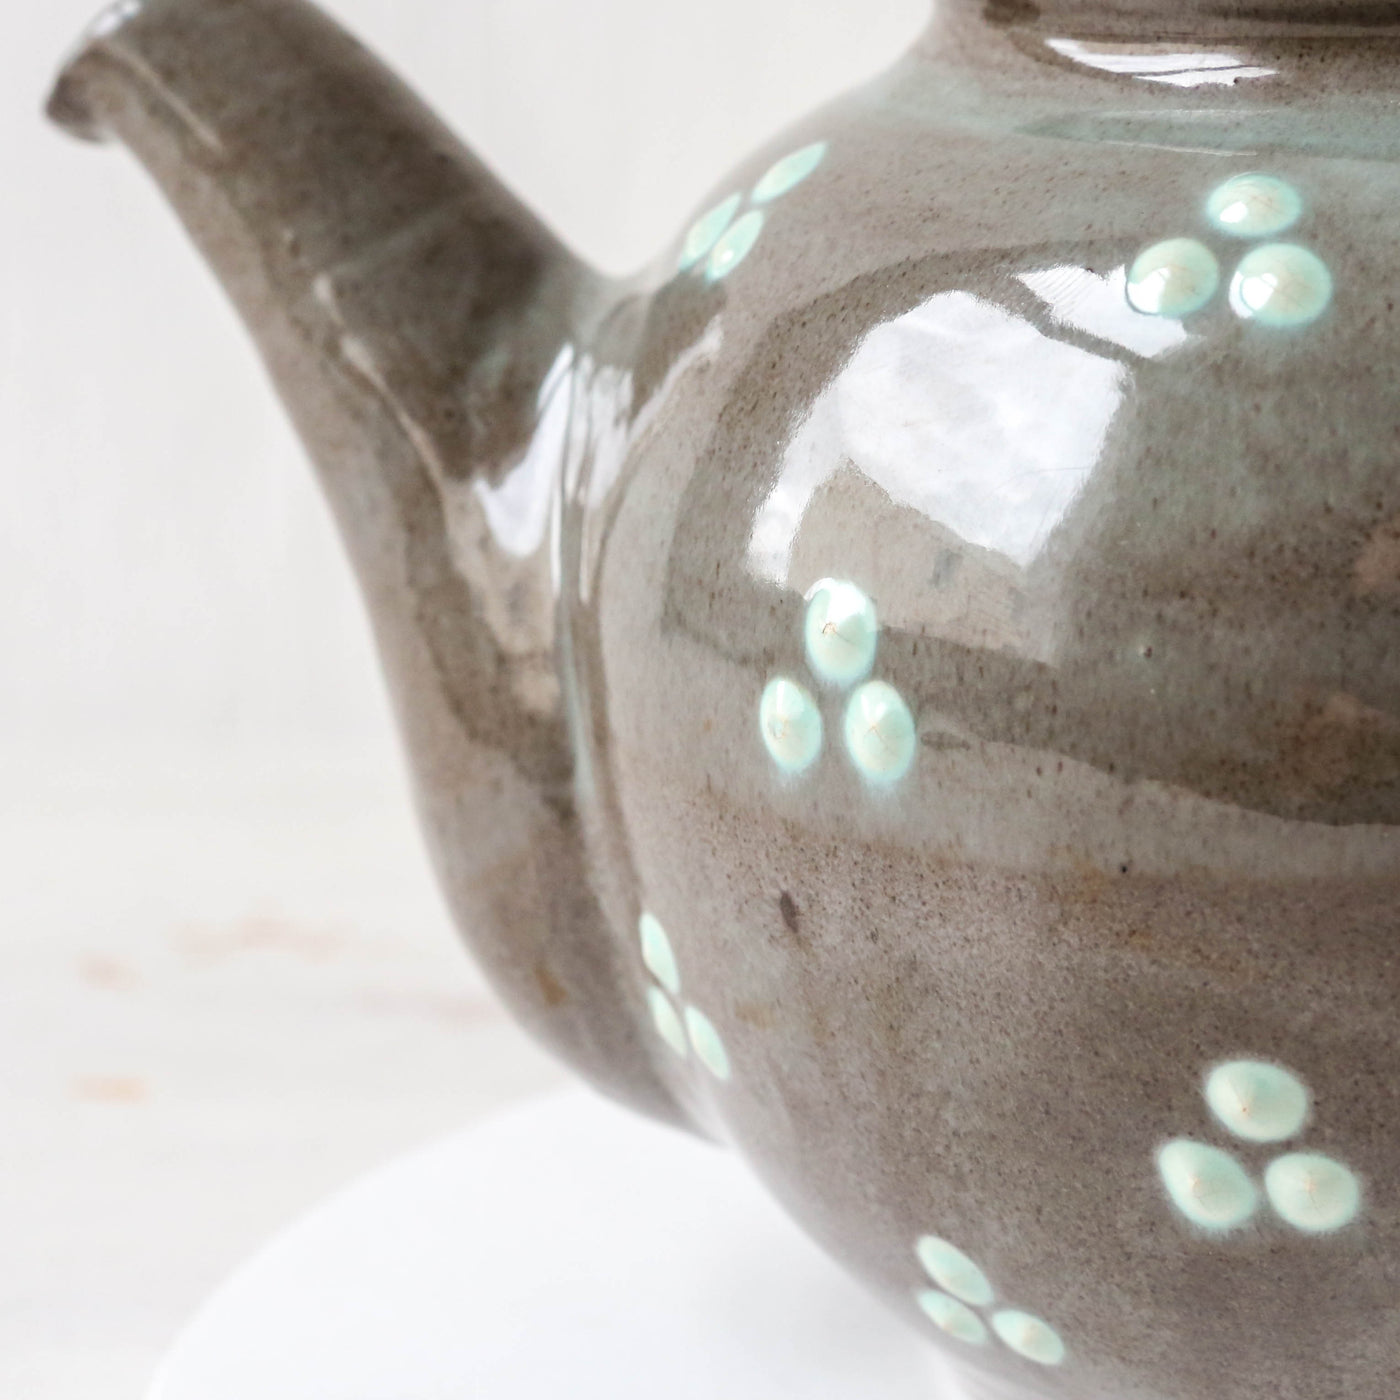 Vintage Slipware Pottery Teapot - Grey with spots design